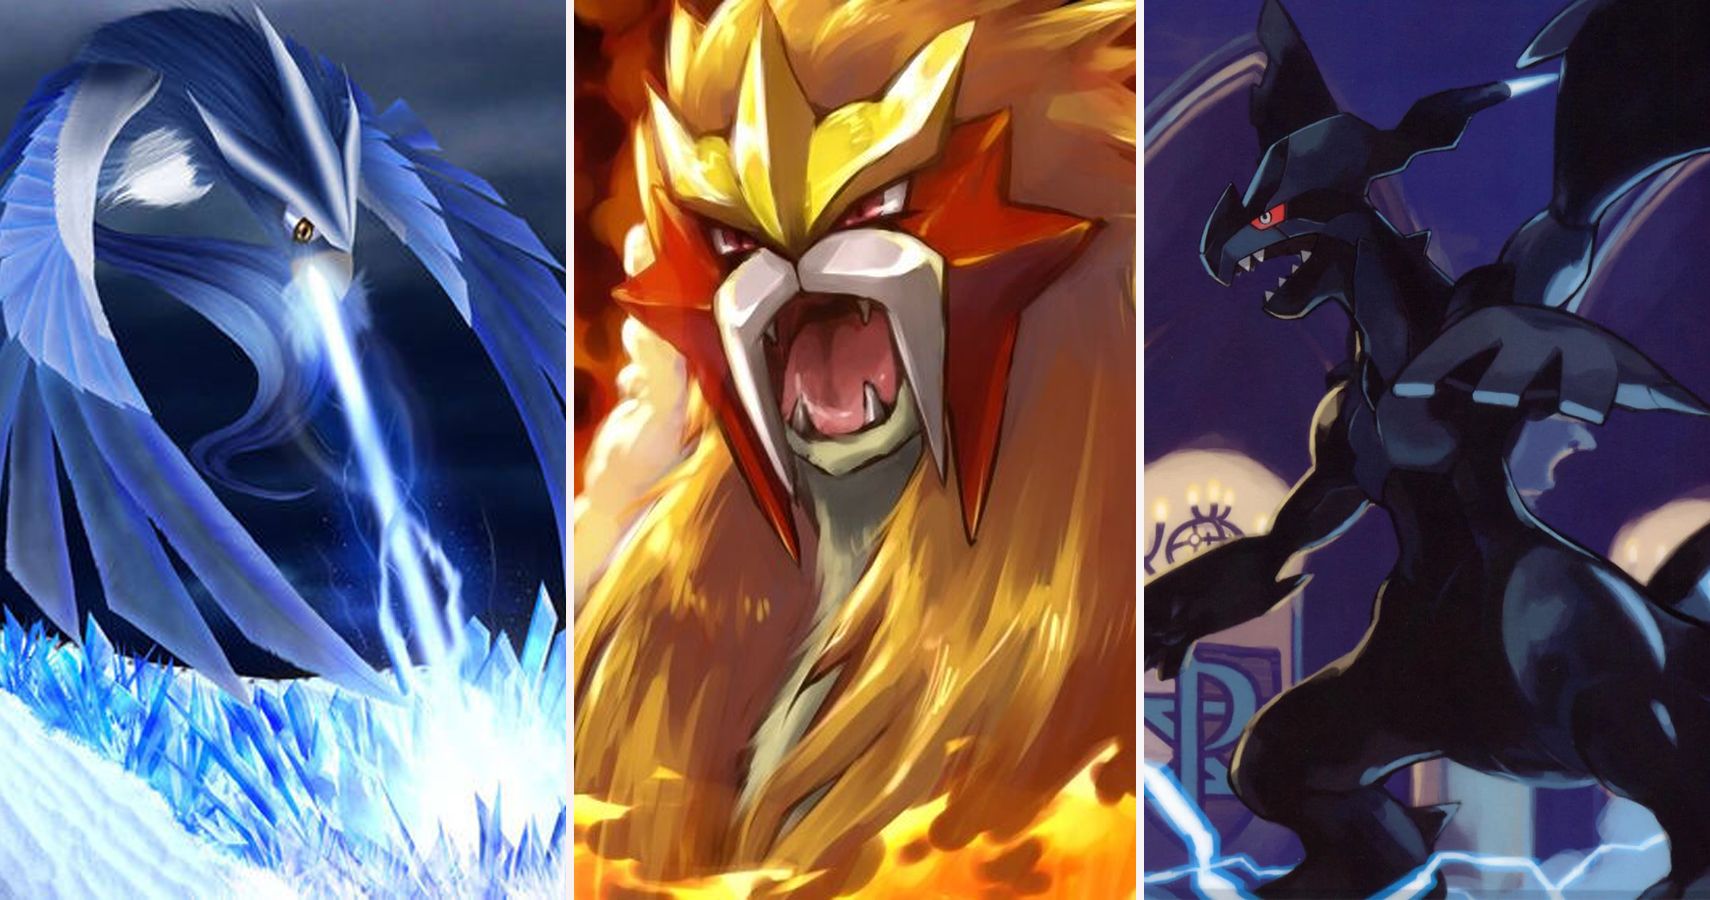 Ranking ALL Legendary & Mythical Pokemon + Ultra Beasts 